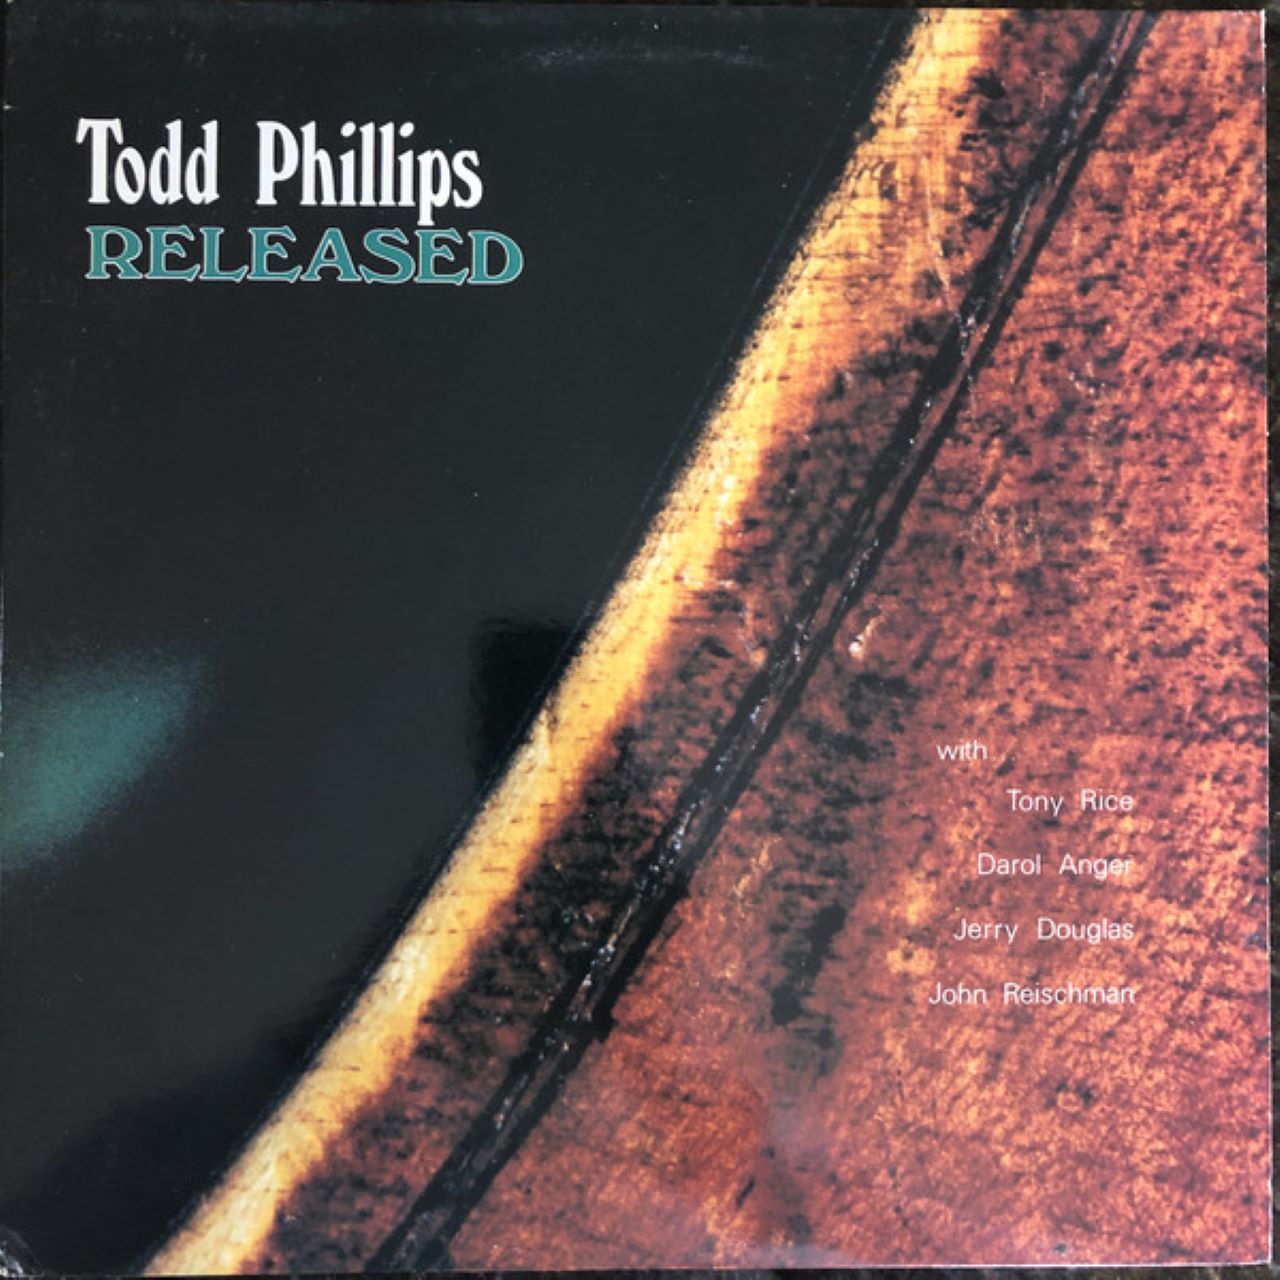 Todd Phillips - Released cover album